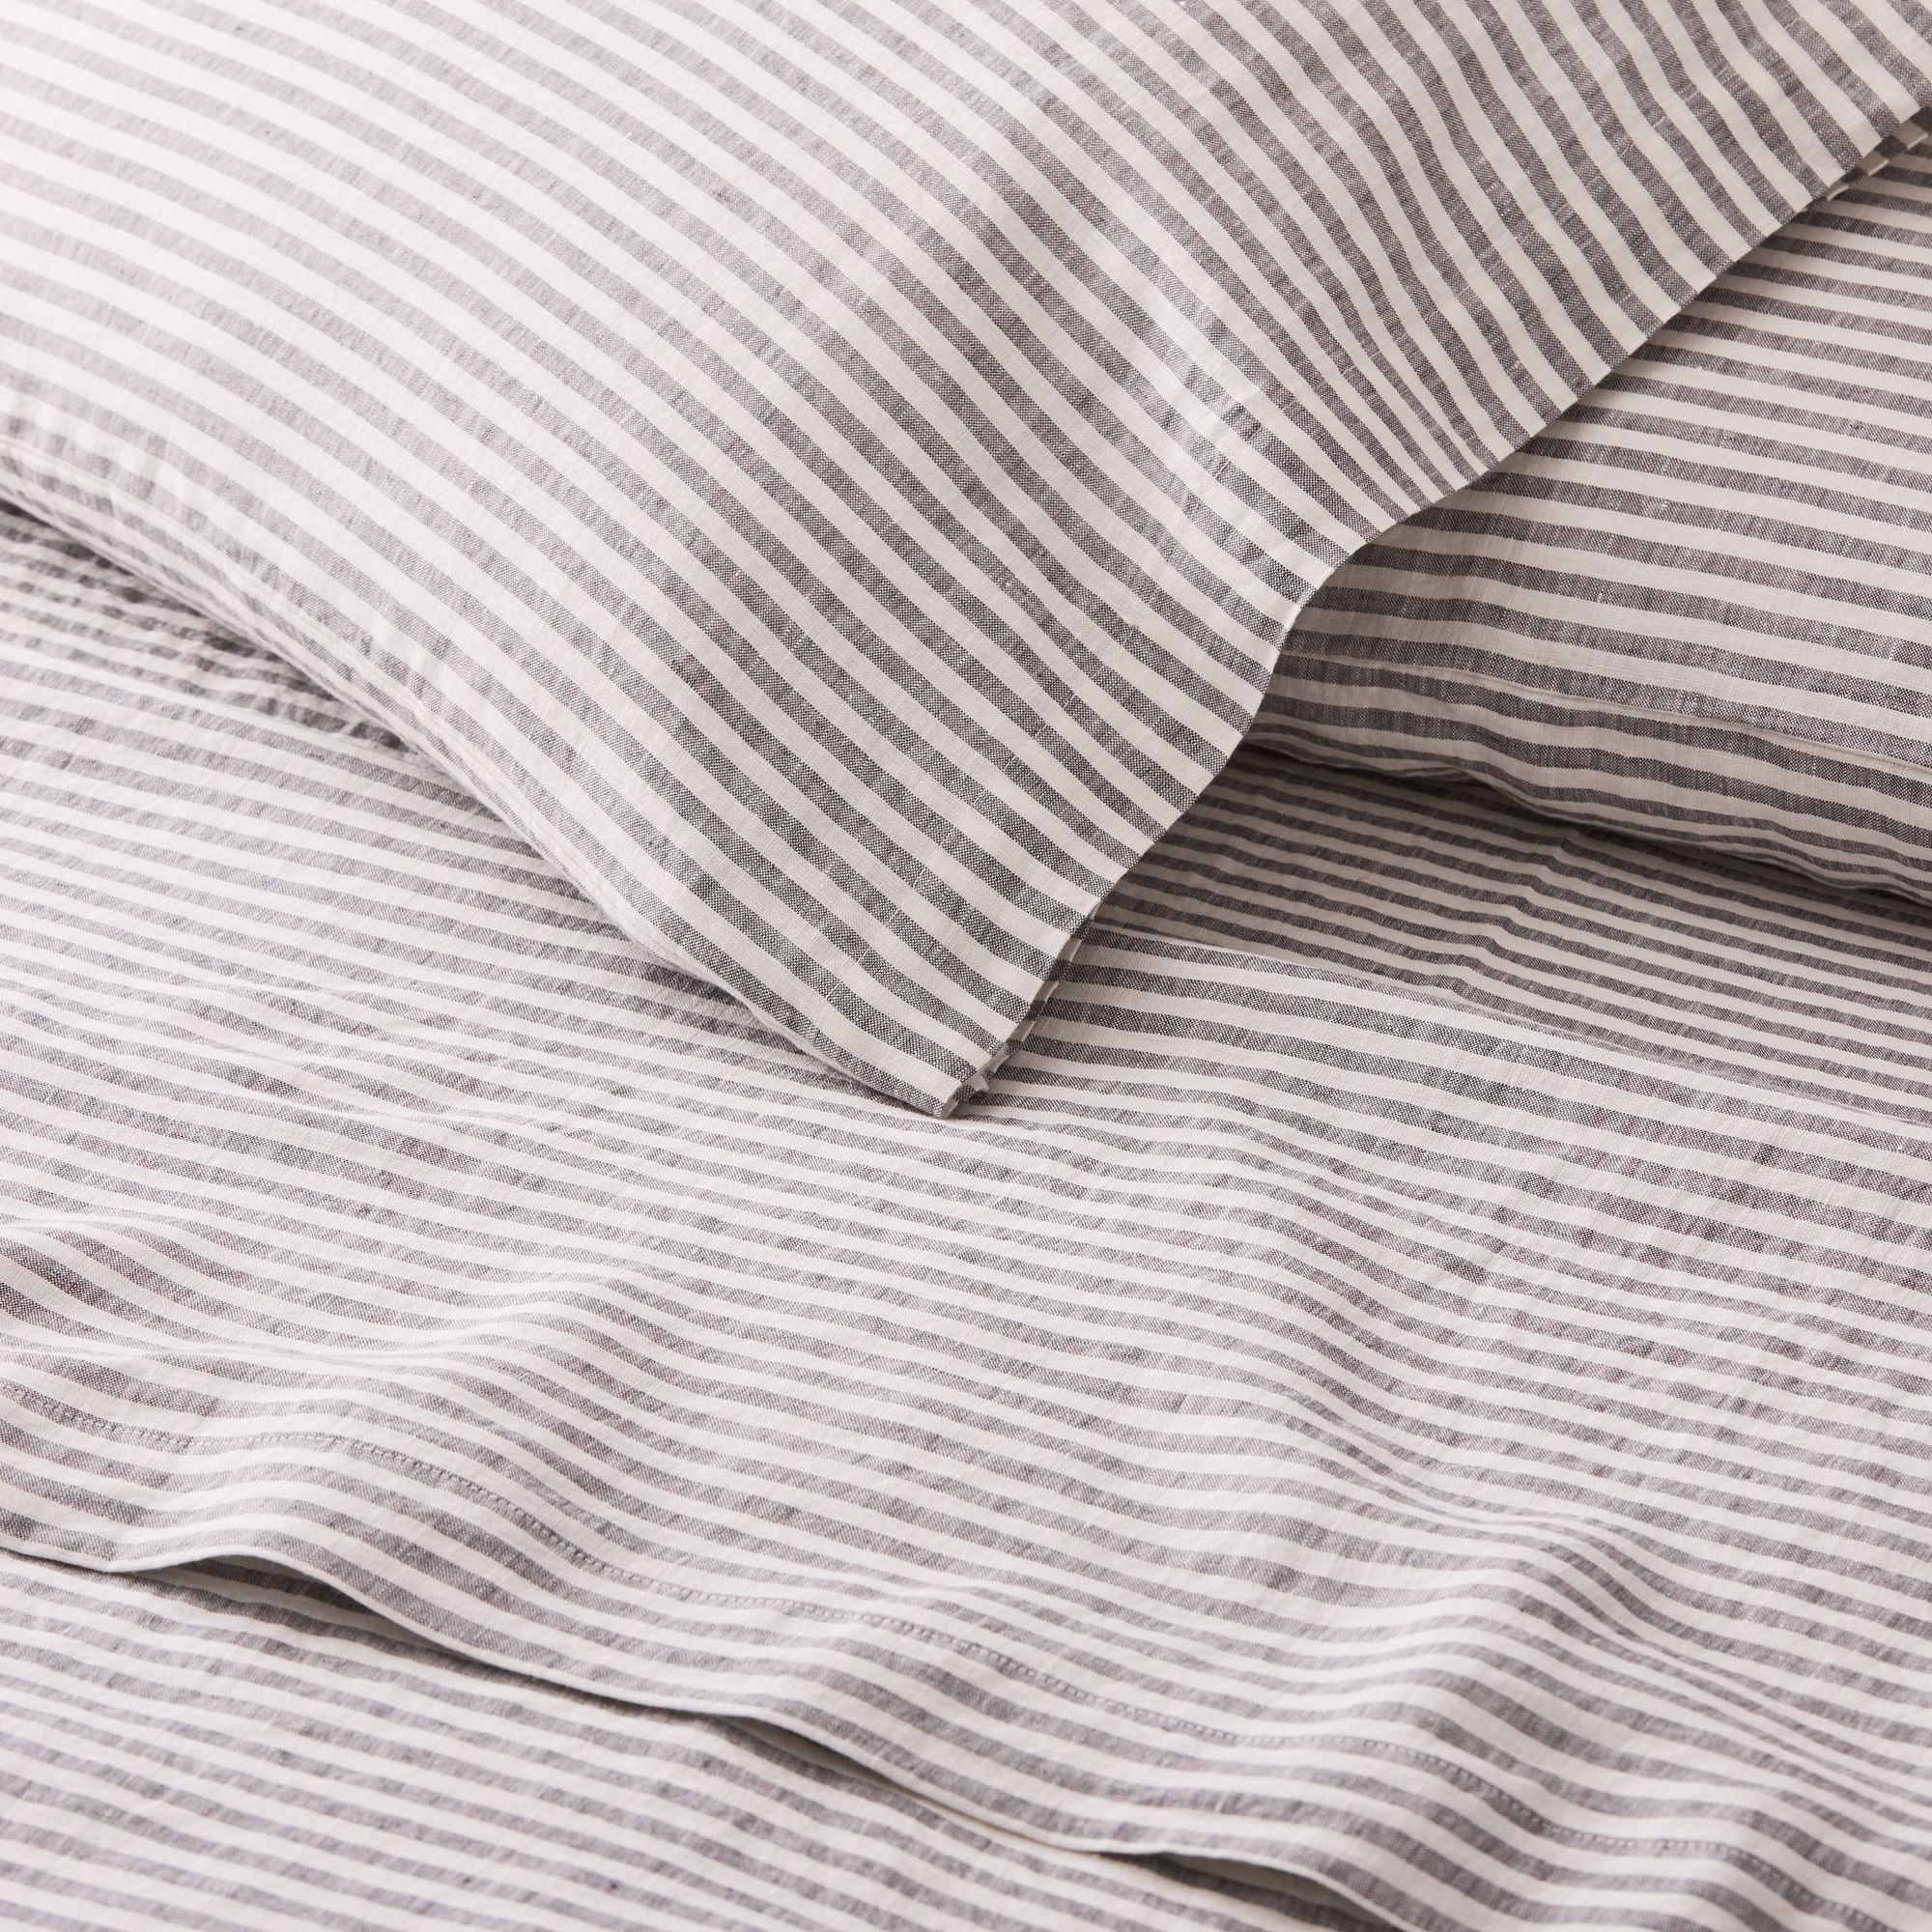 European Flax Linen Classic Stripe Sheet Set, Queen, Slate - Image 1